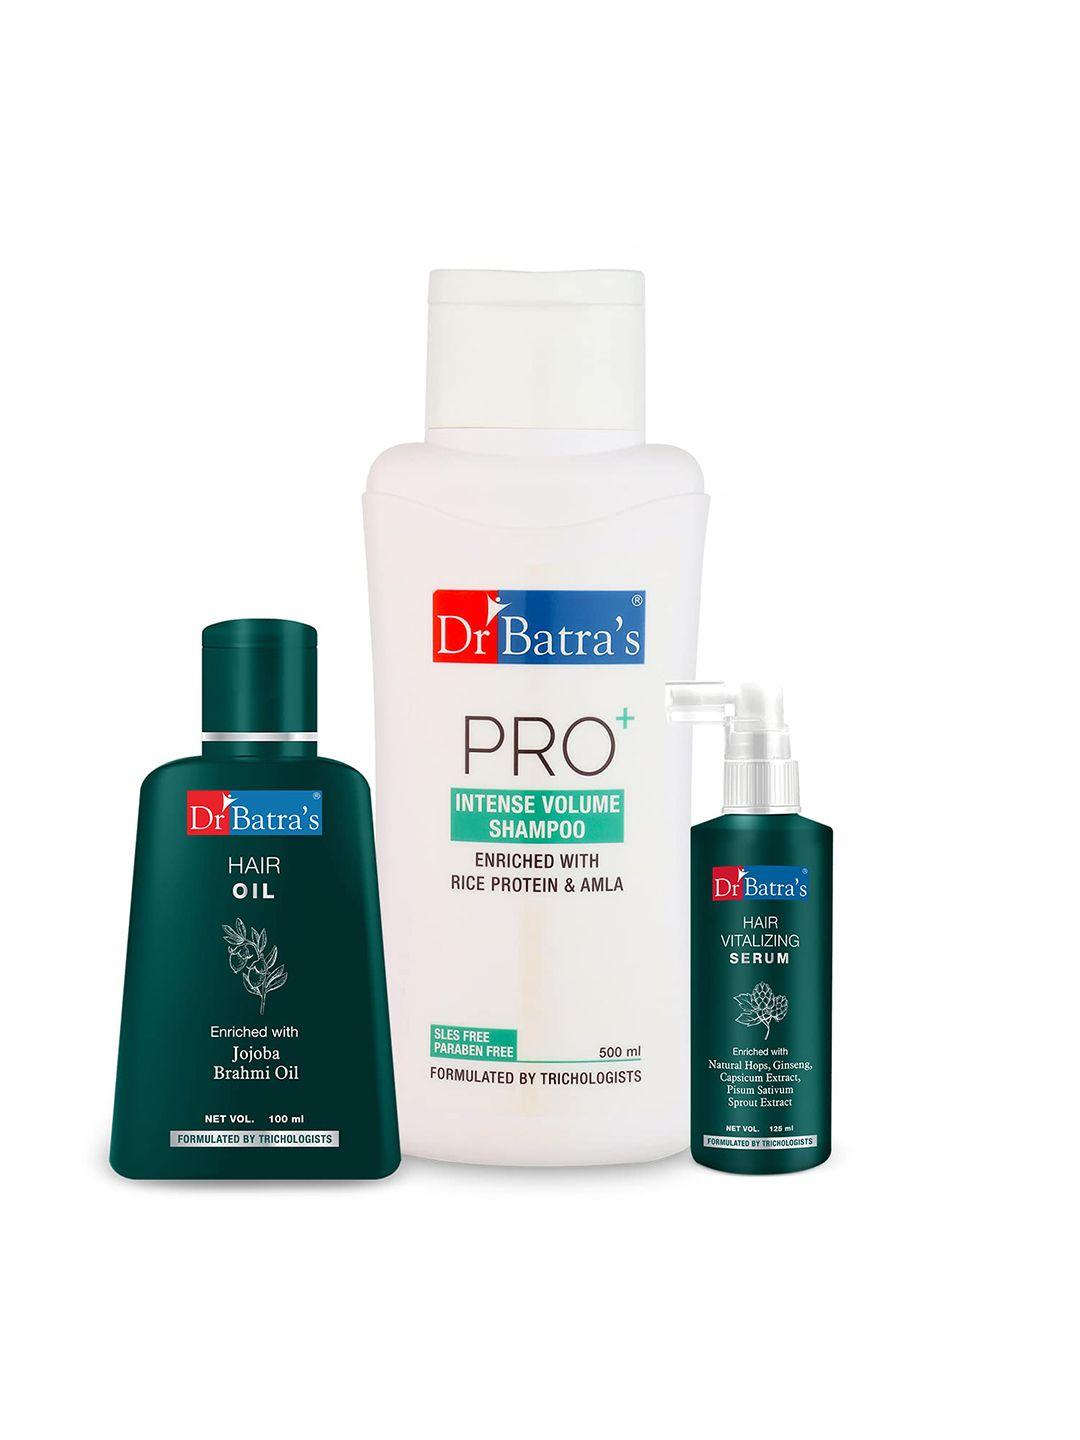 dr batras hair vitalizing serum 125ml + pro+ intense volume shampoo 500ml + hair oil 100ml